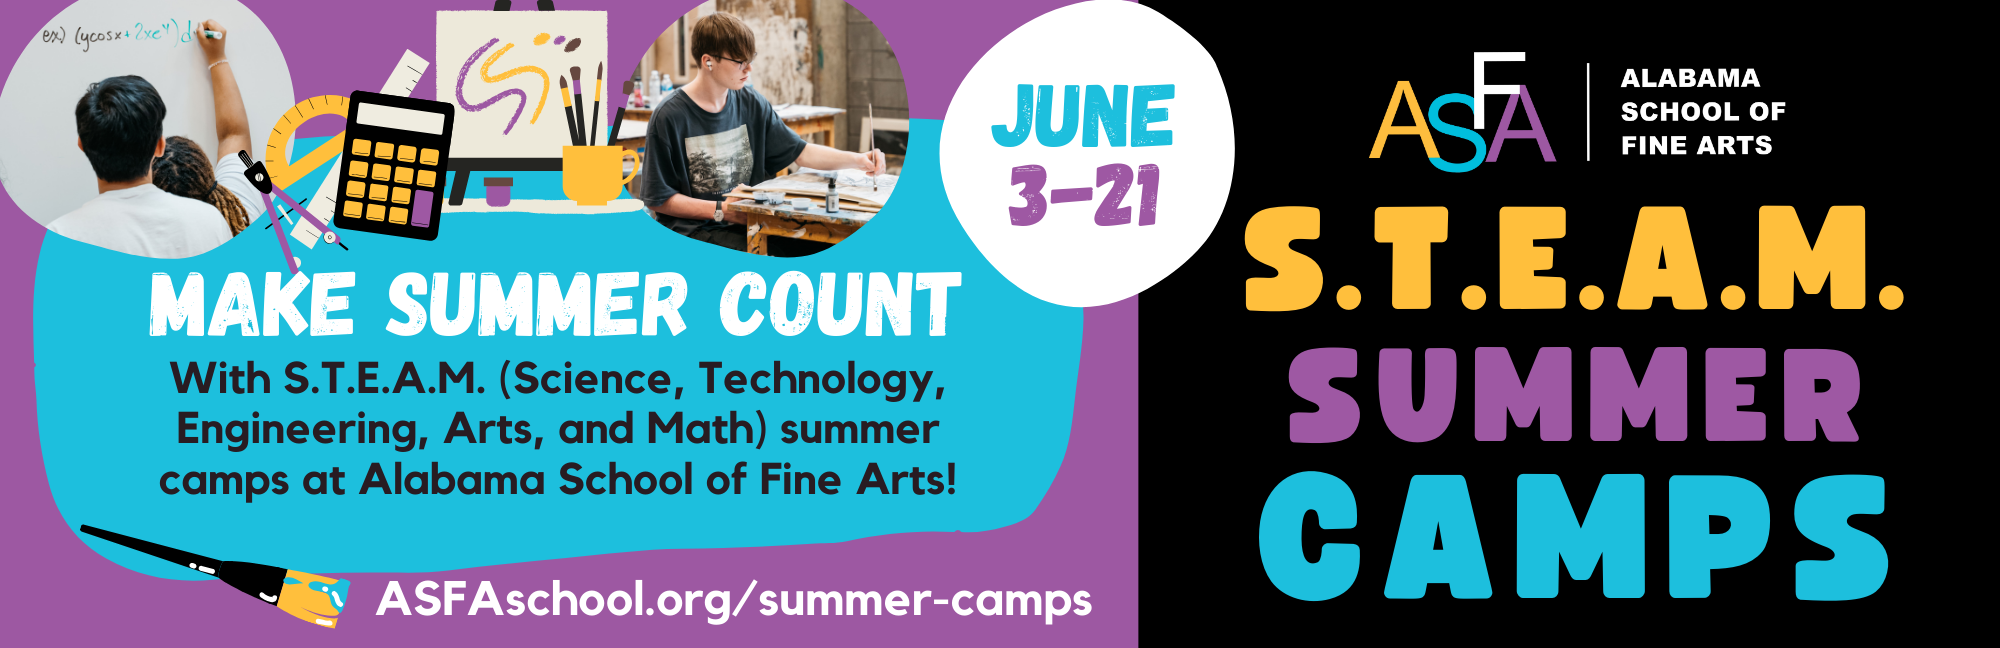 ASFA Summer Camps help make summer count